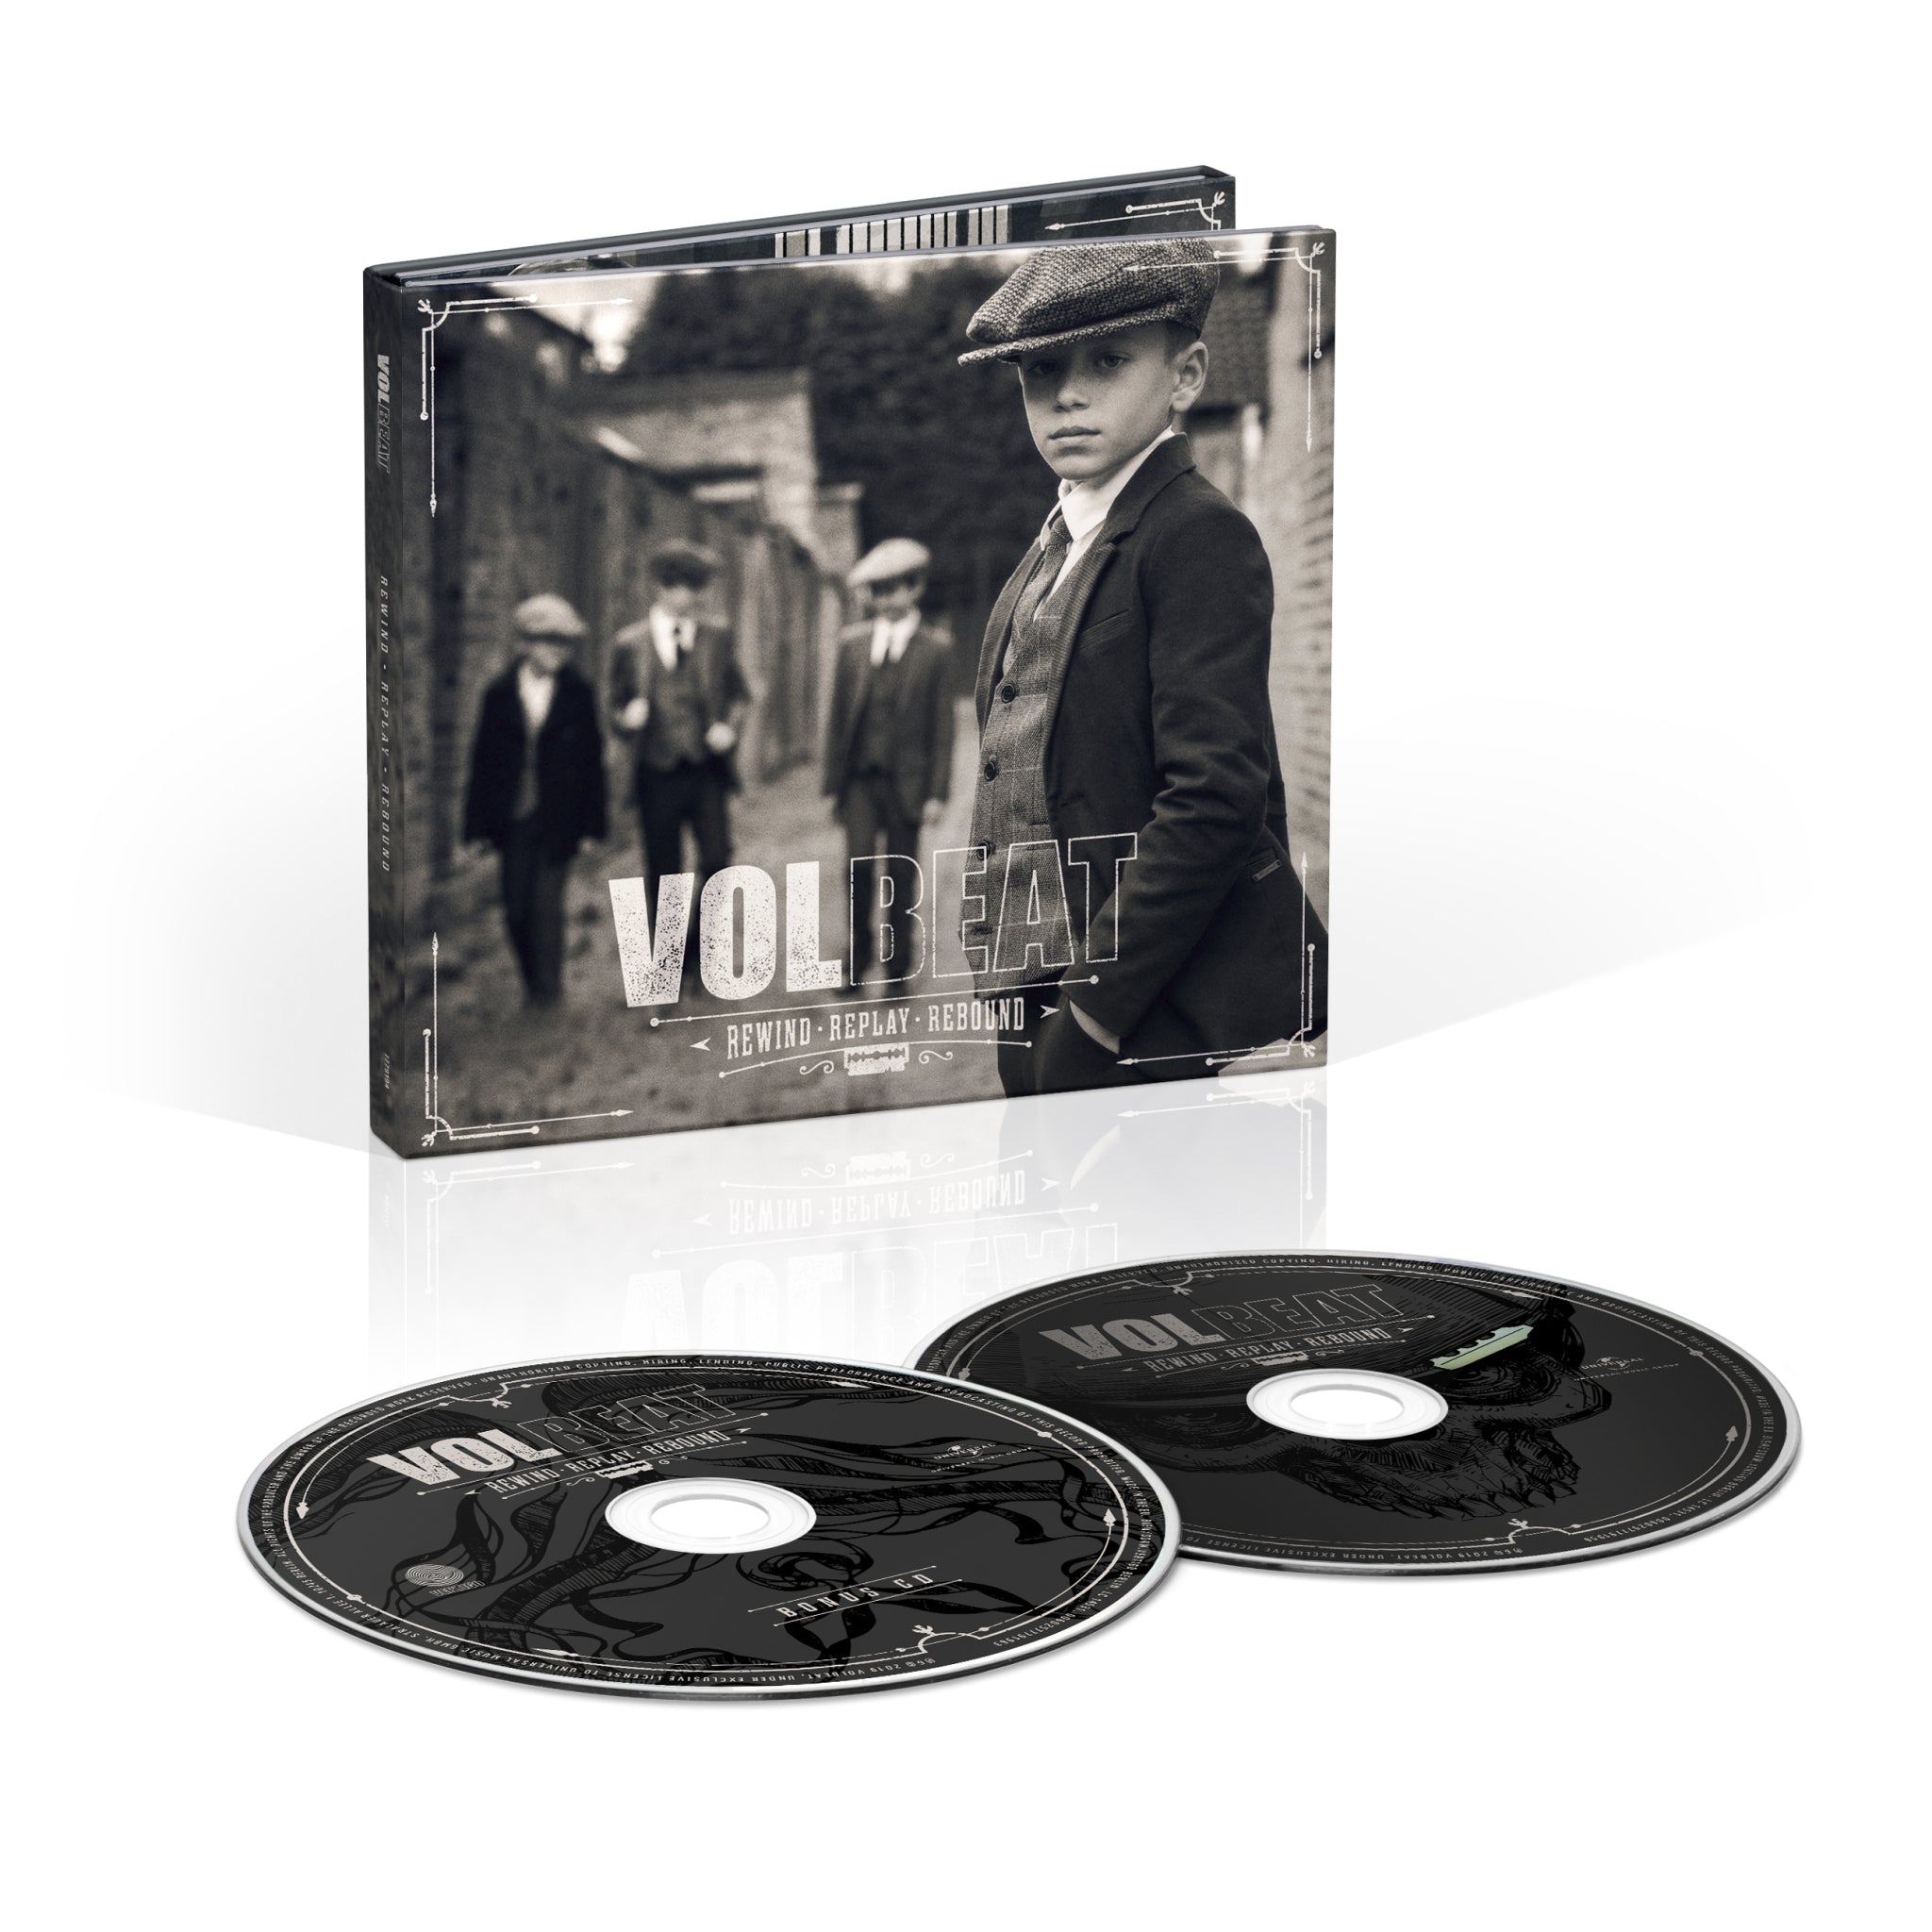 Volbeat - Rewind, Replay, Rebound: 2CD